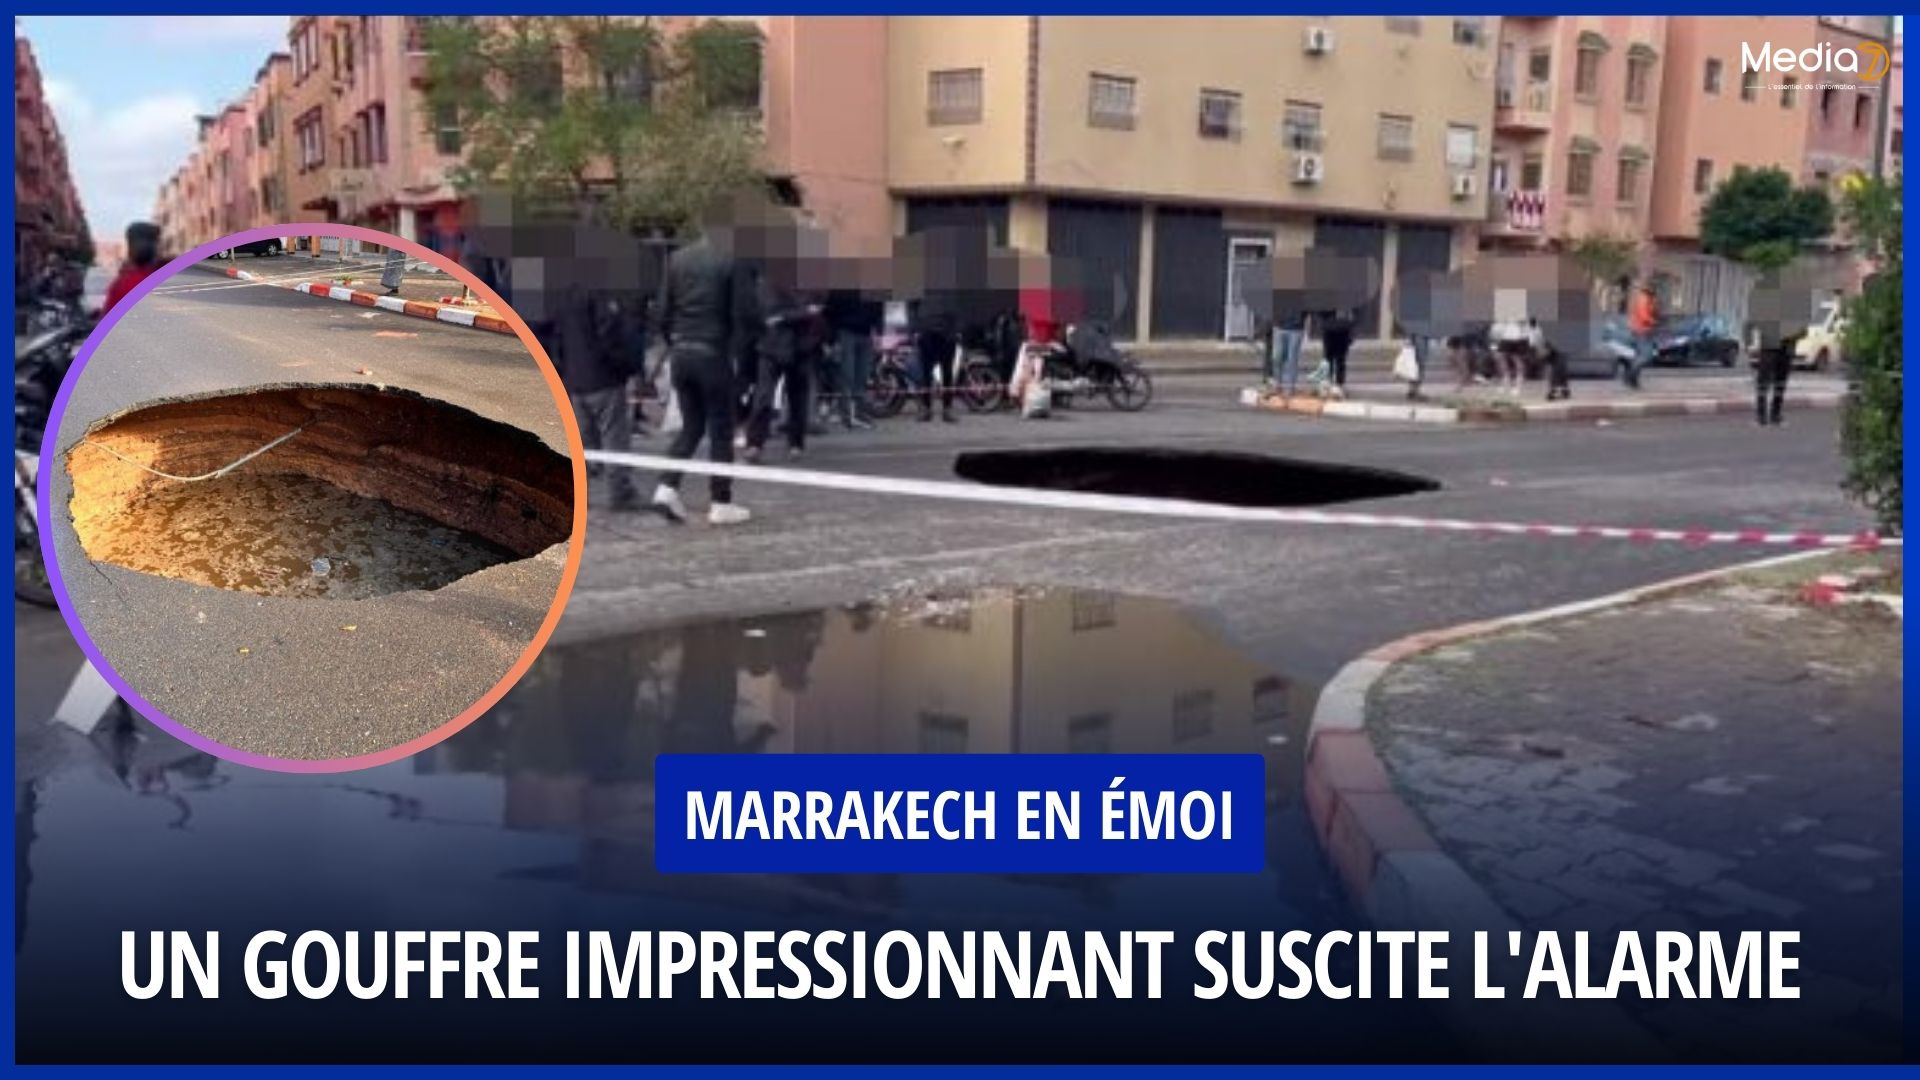 Marrakech in turmoil: An impressive sinkhole raises alarm after recent rainfall